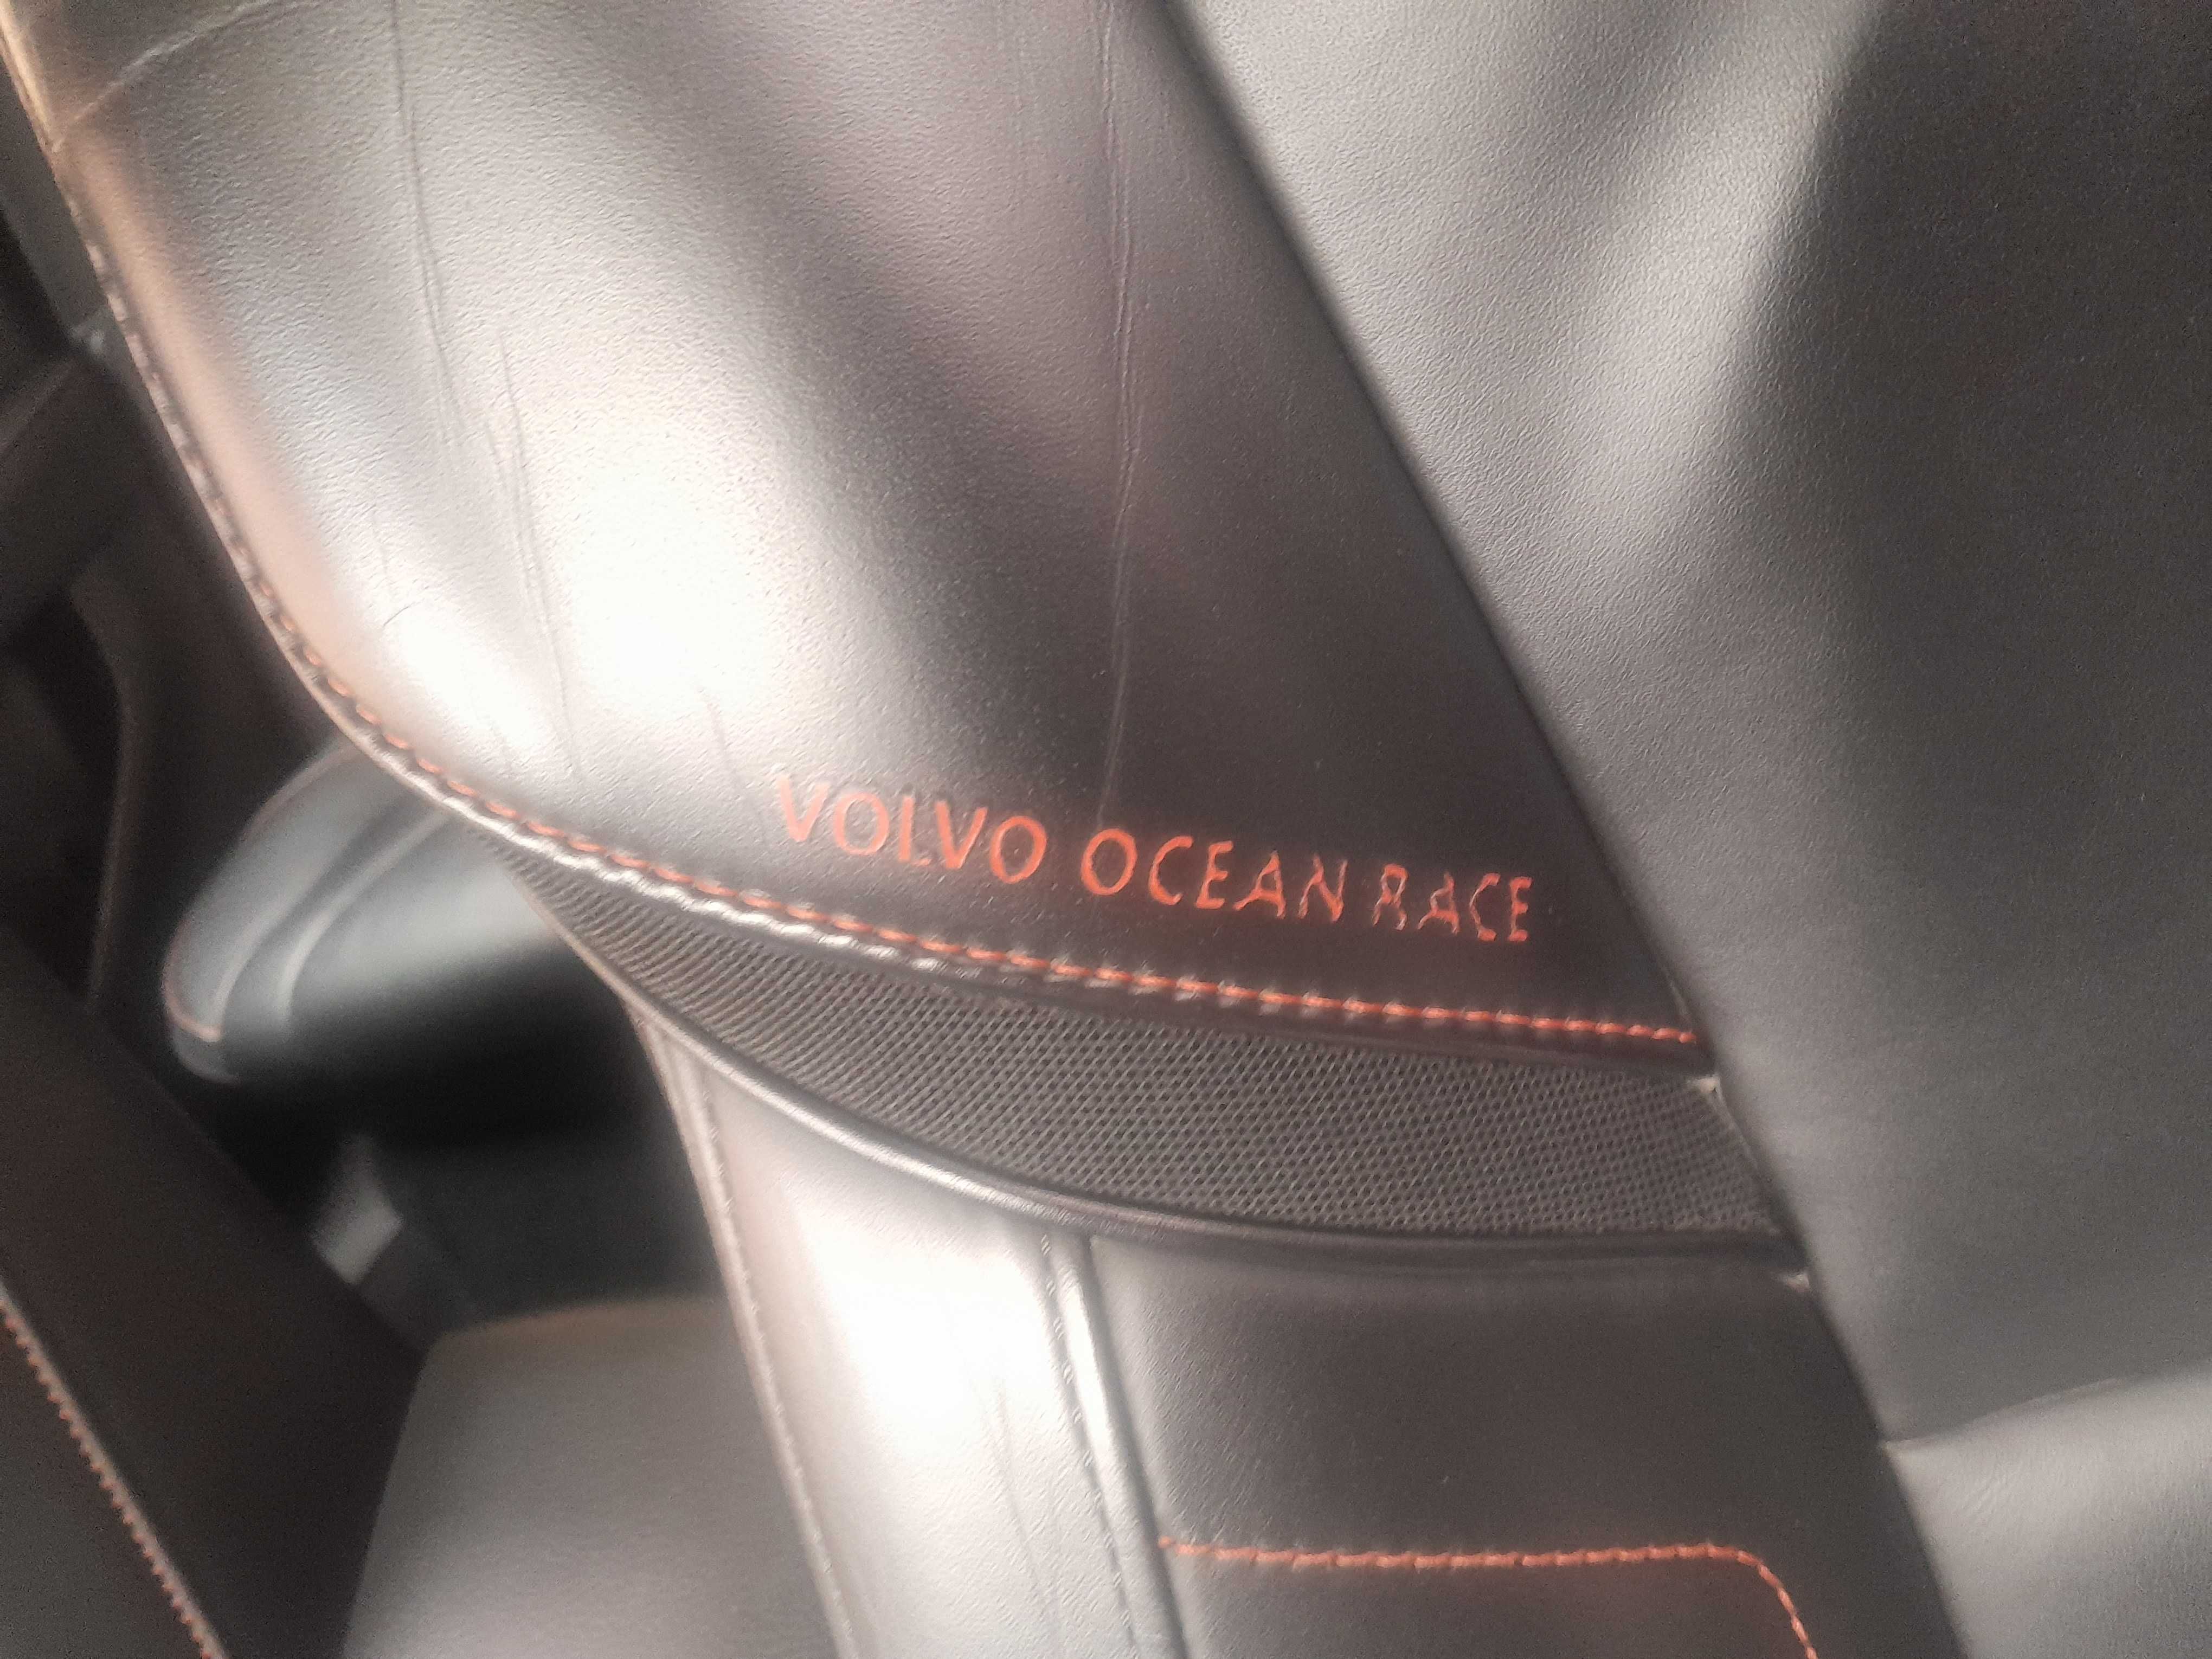 Volvo v40  Ocean Race